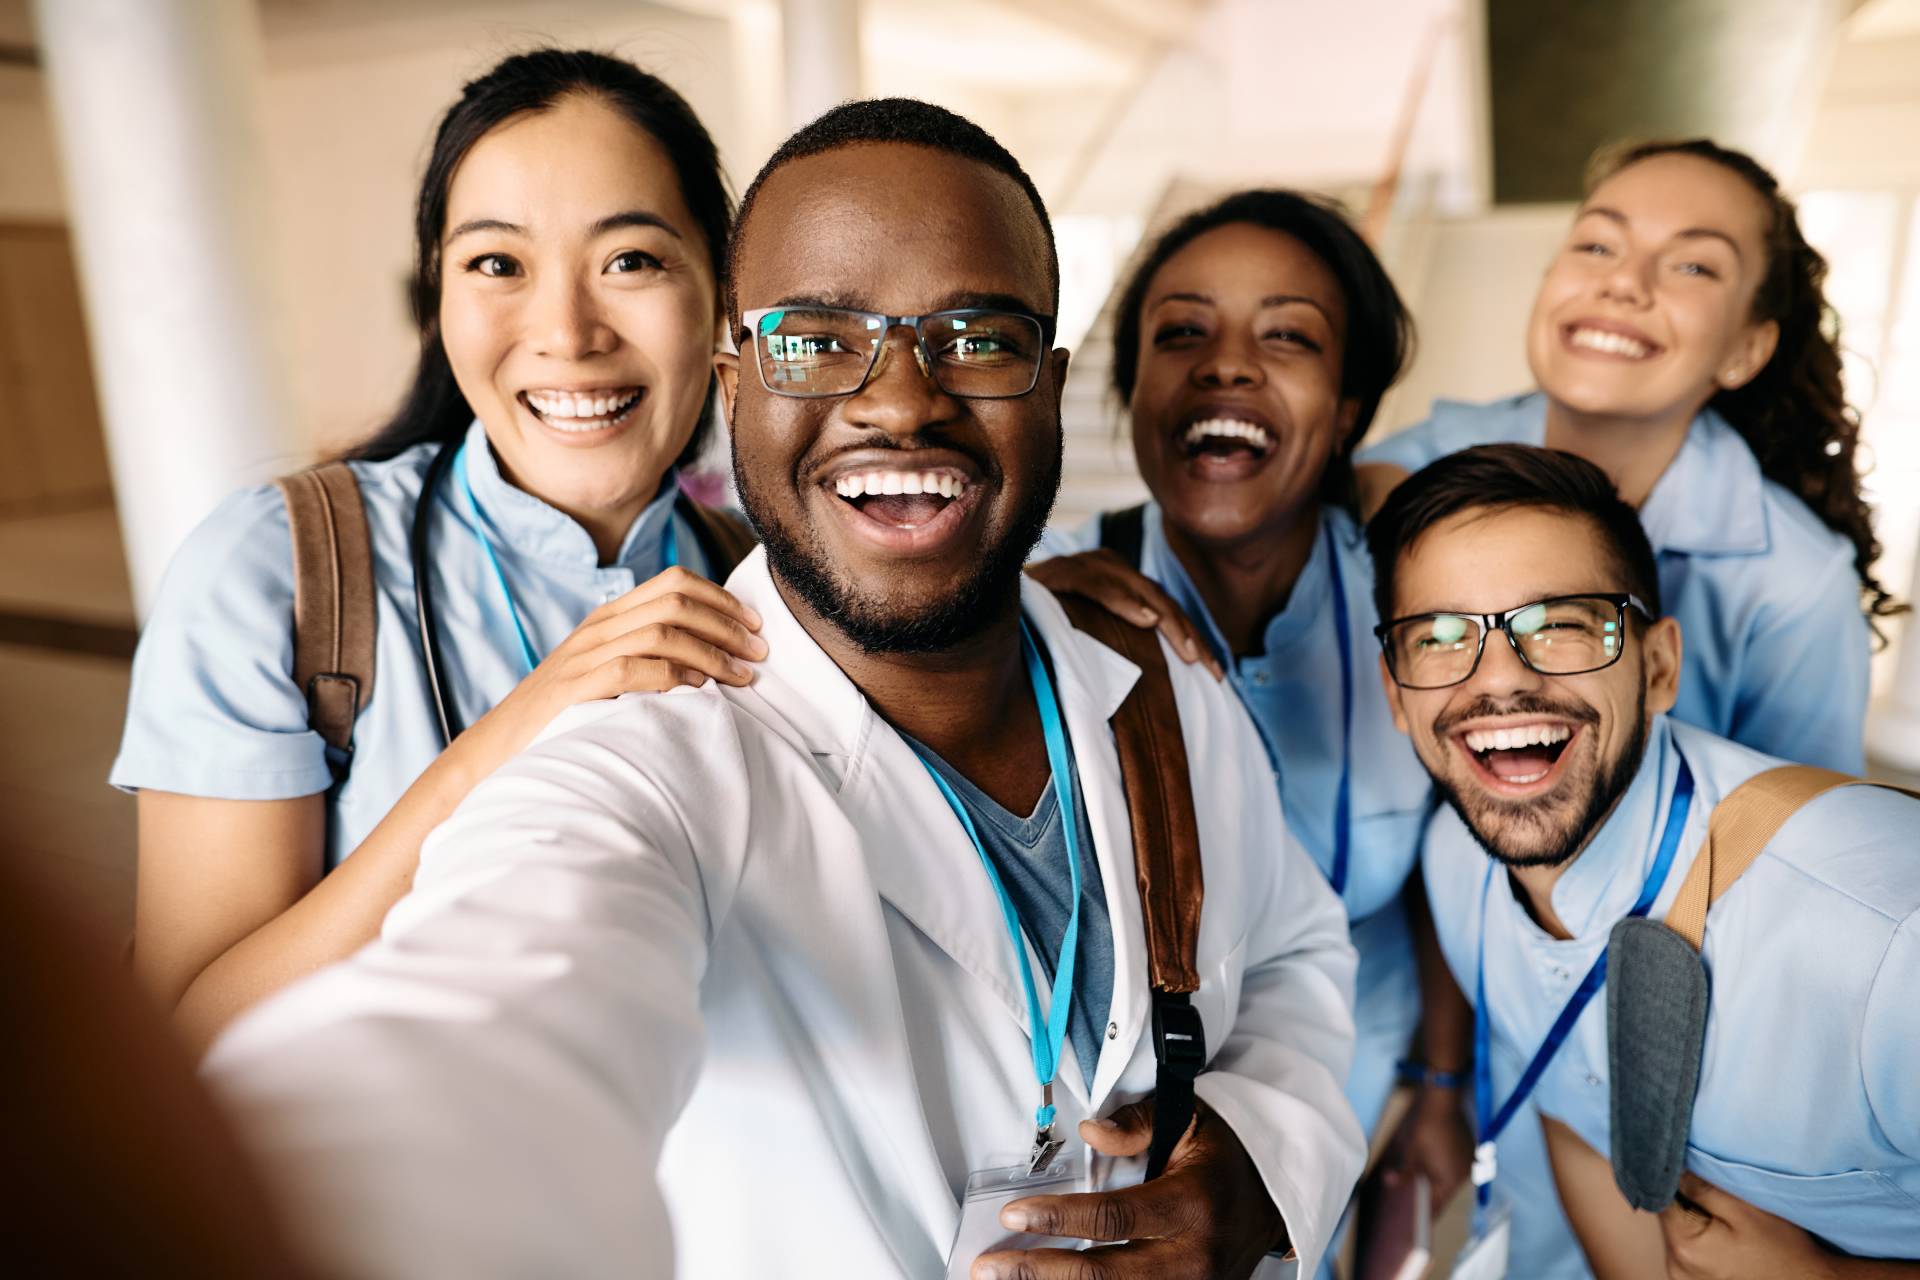 people dressed in hospital scrubs smile for a selfie together